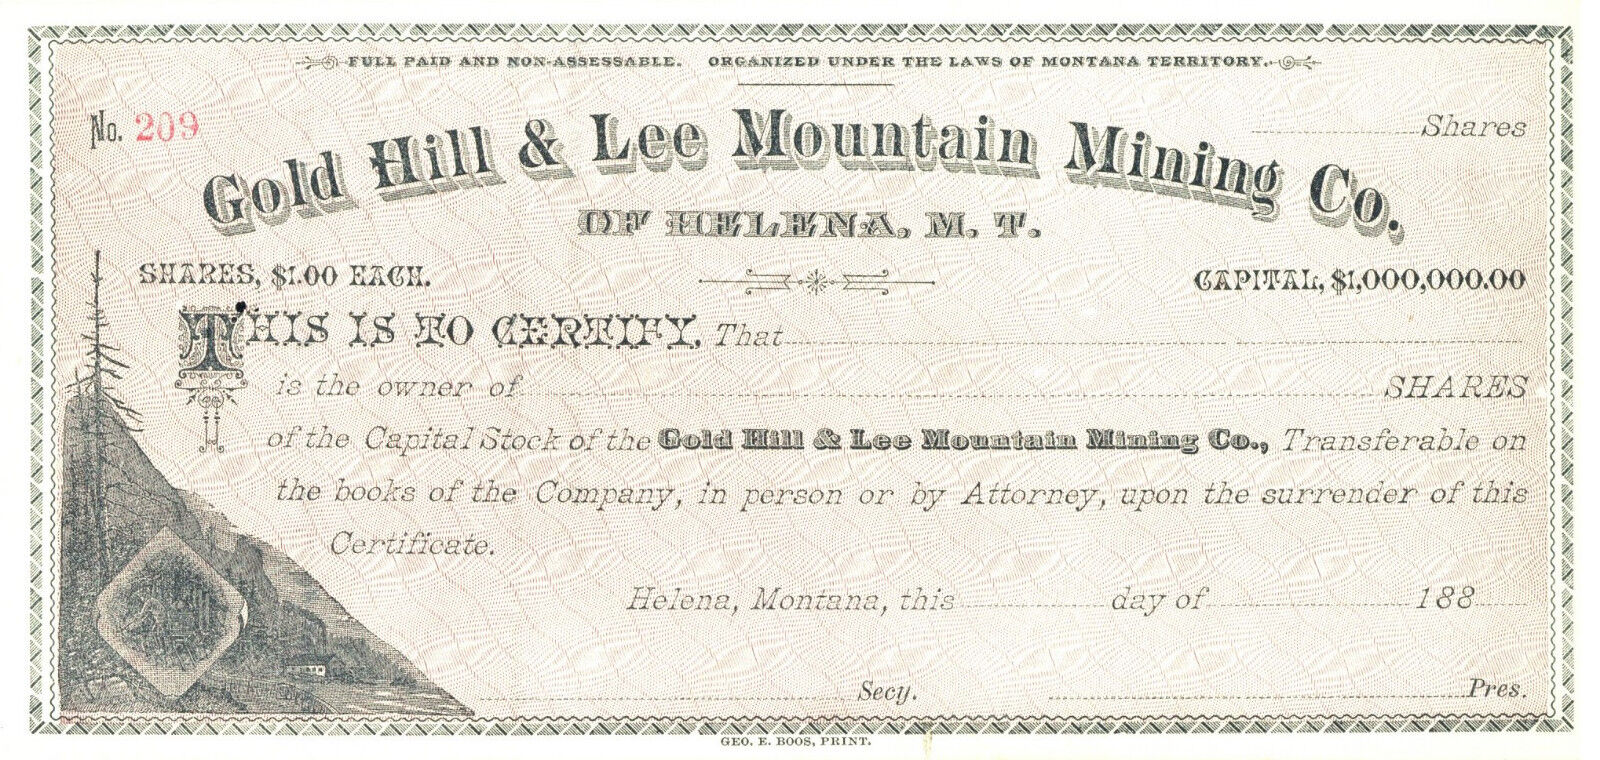 Gold Hill & Lee Mountain Mining Company. Stock Certificate. Helena, Montana